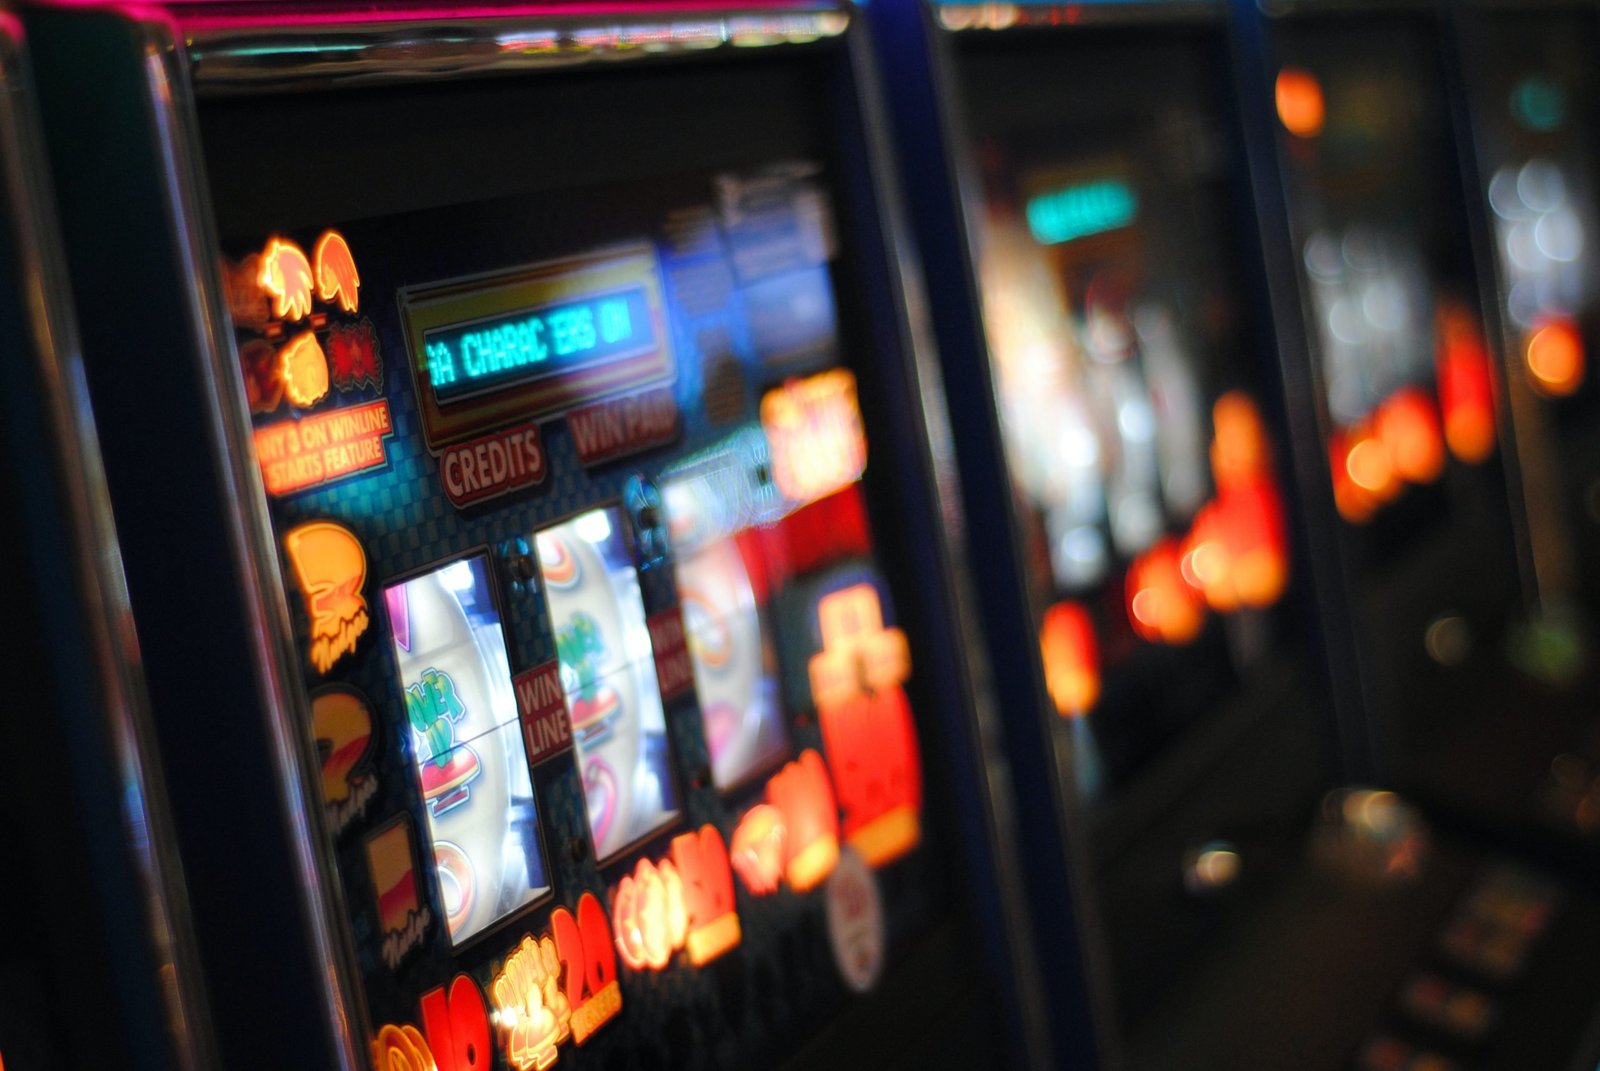 Spilleautomater Jackpot betalt – Gambler VINNER juridisk kamp mot kasinoet for $285,000 XNUMX